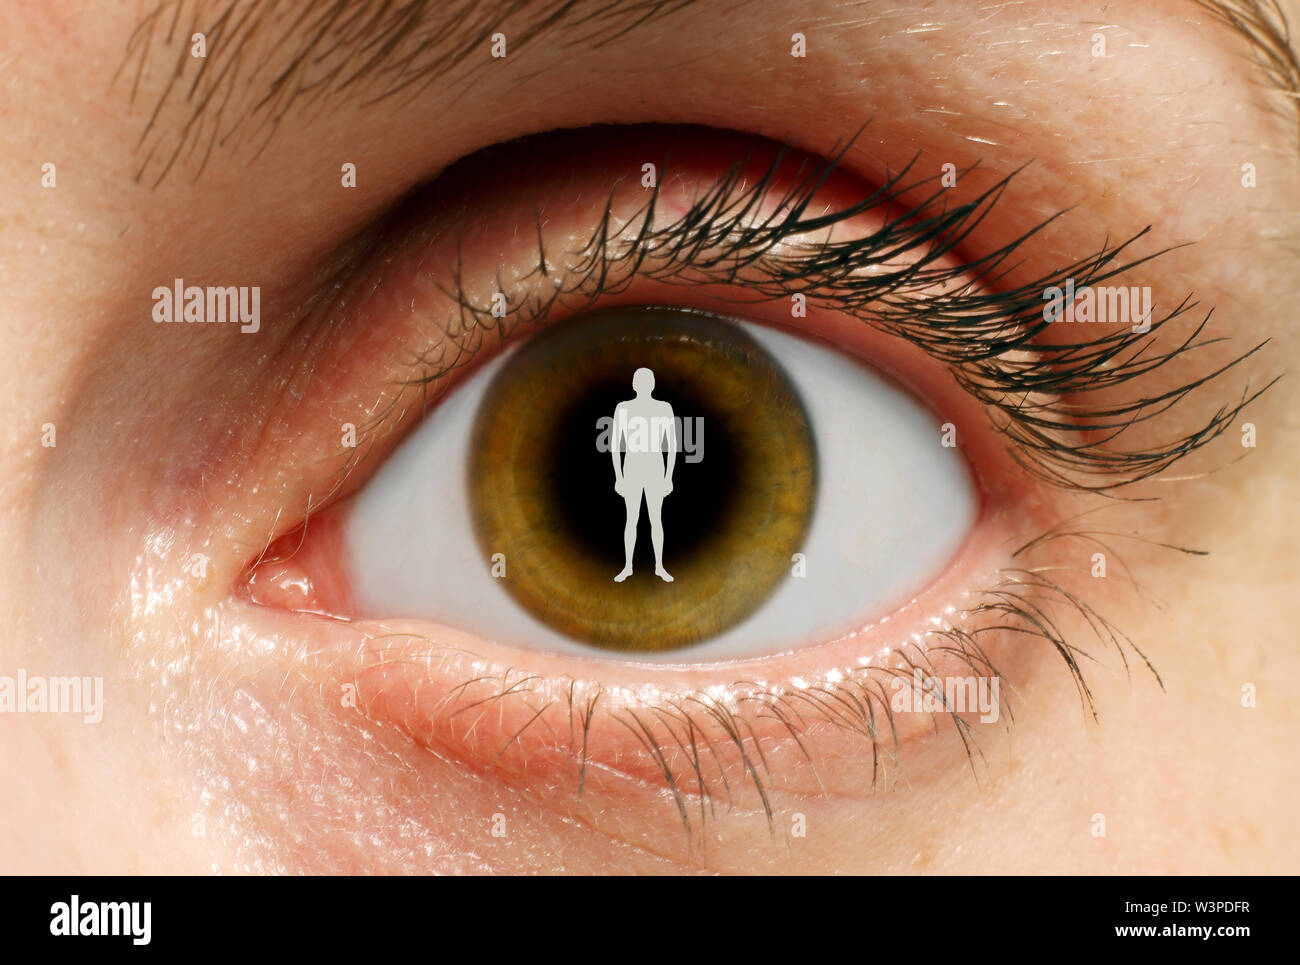 Image of man in eye. Stock Photo